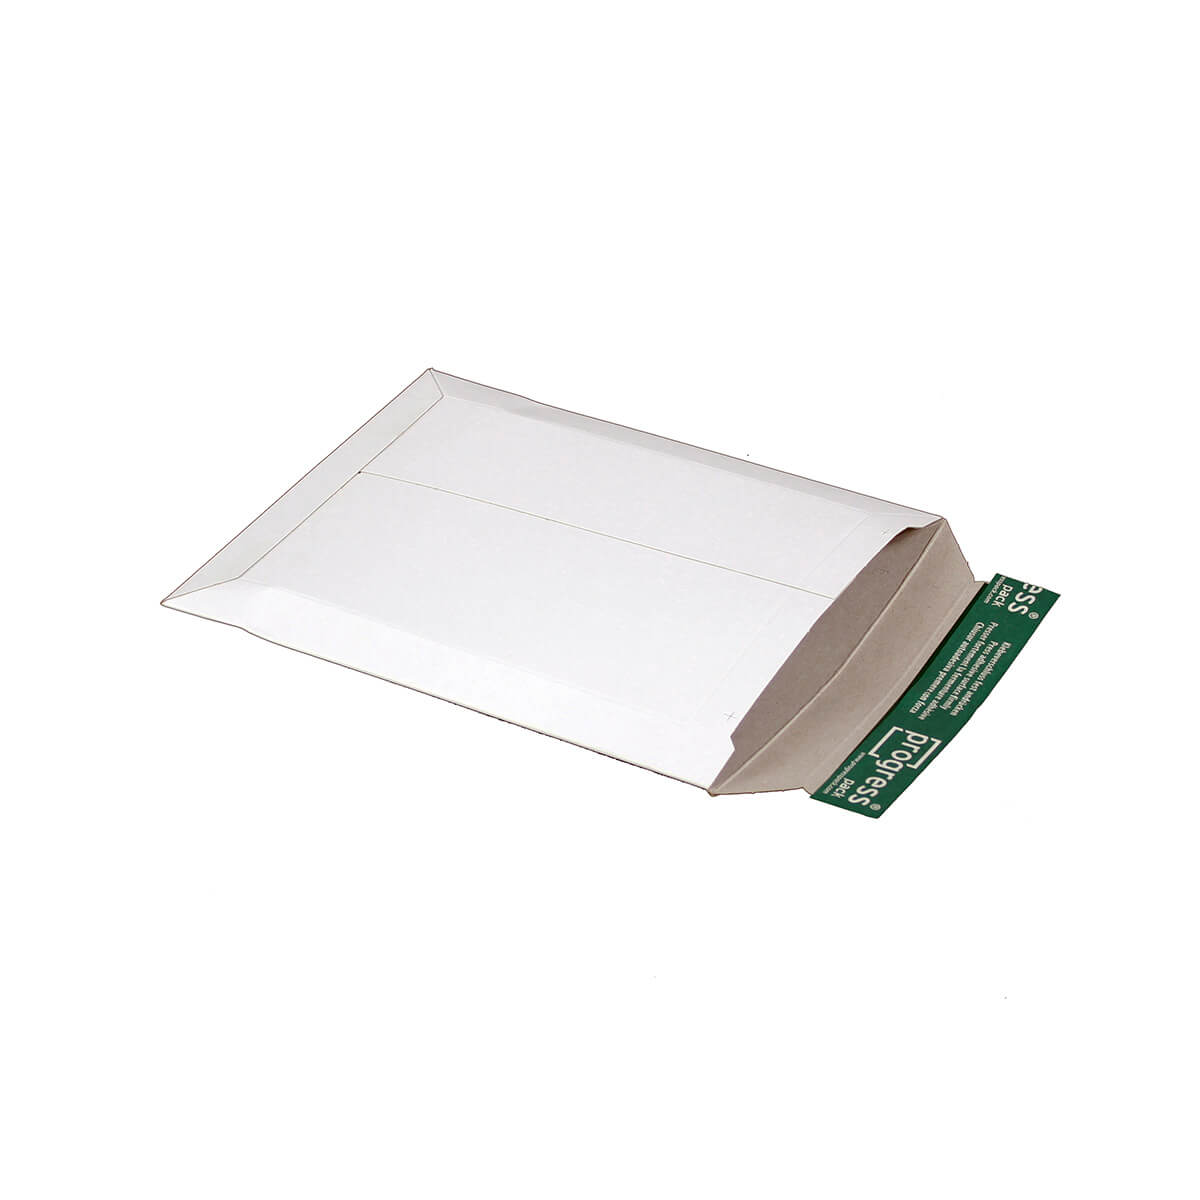 Shipping bag solid cardboard 205x262x30-0 mm din b5+ self-adhesive + tear strip, white - progressPACK